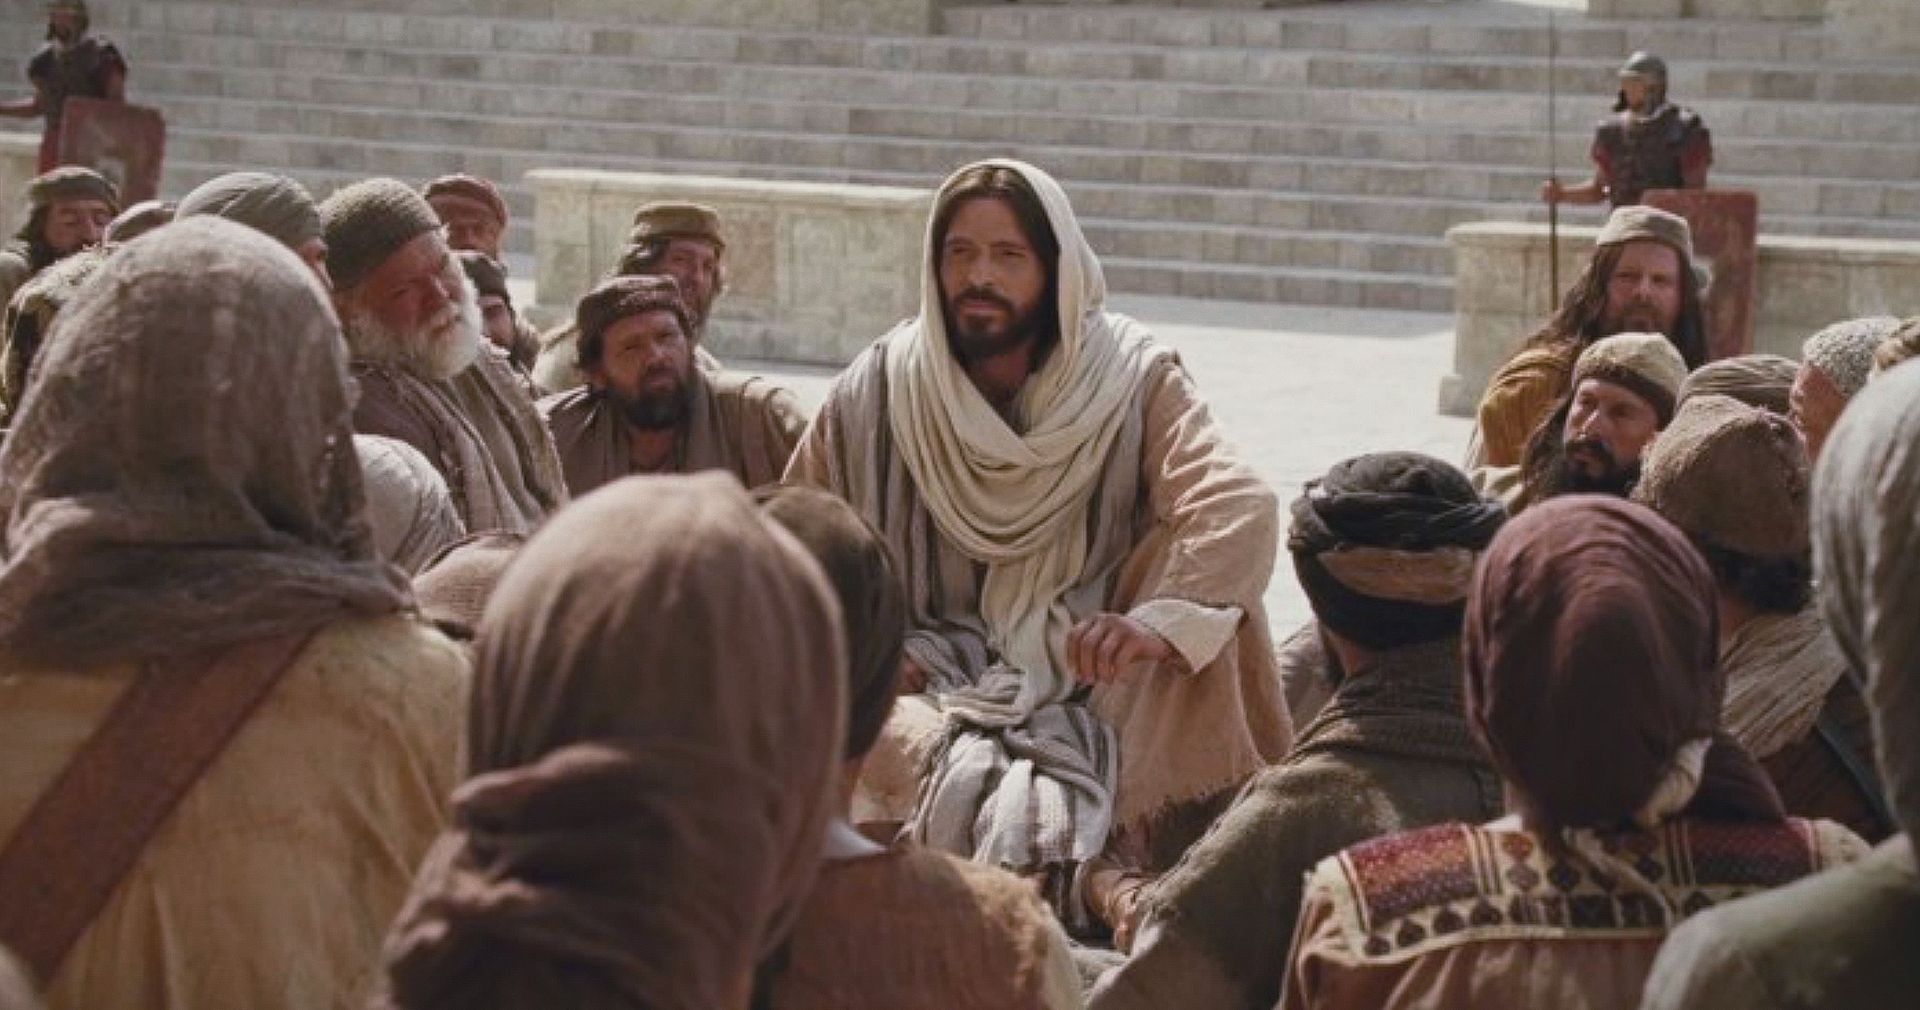 Jesus Christ sitting in a crowd as He reveals He is the Good Shepherd.